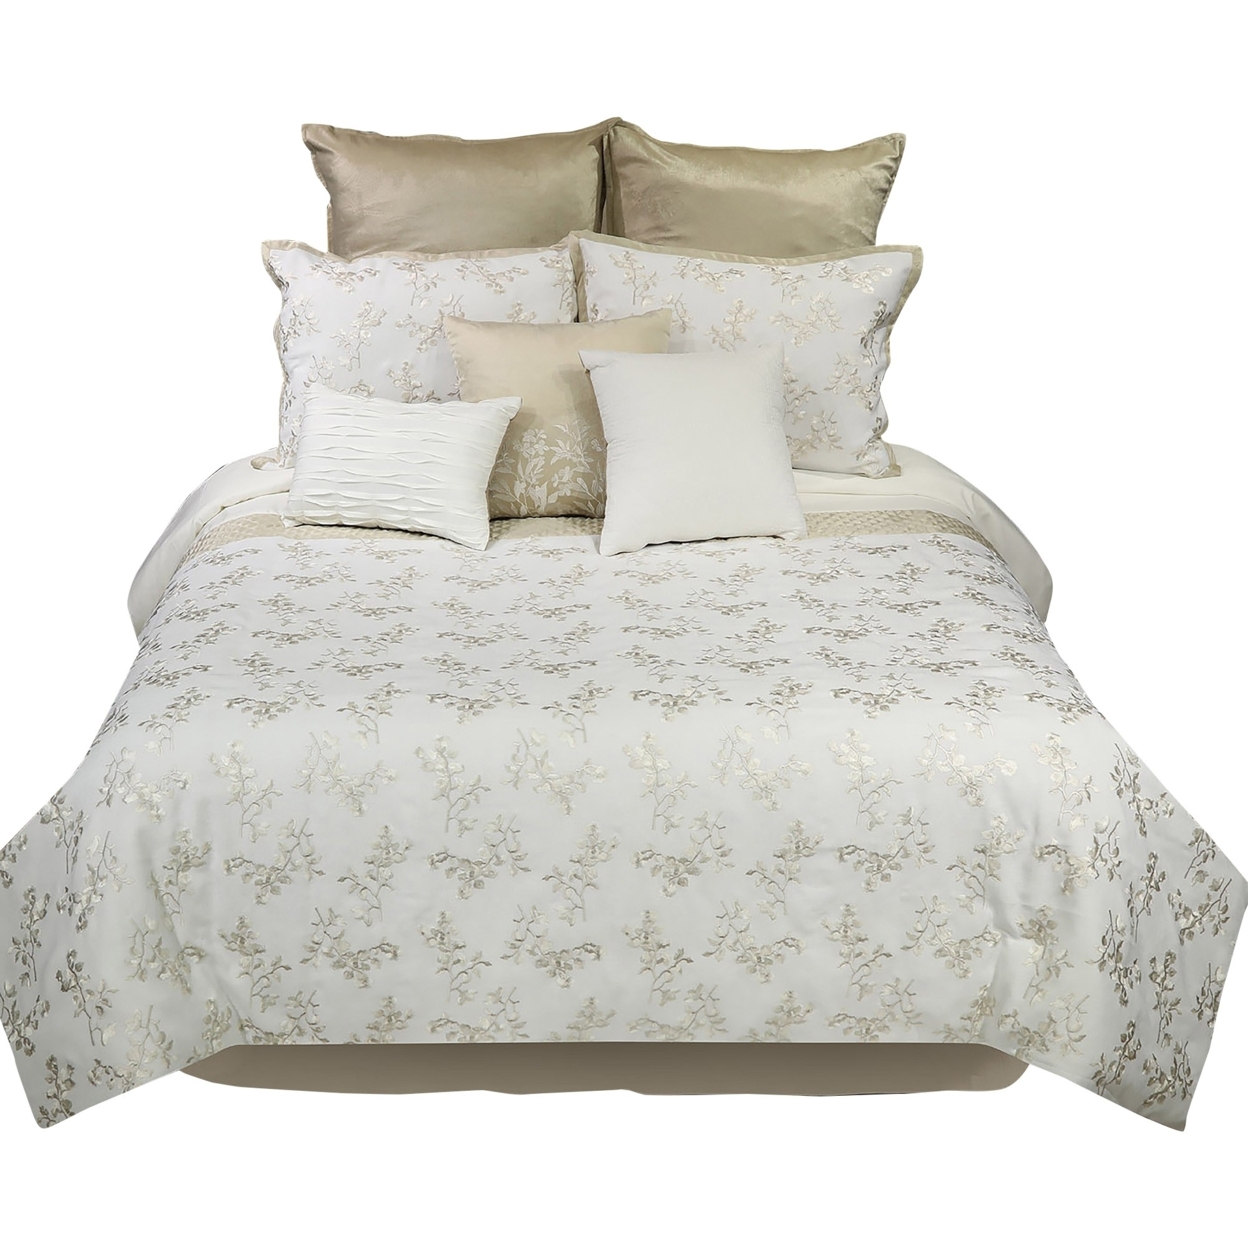 Zoey 9 Piece Polyester Queen Comforter Set, Gold Floral Design Print, White- Saltoro Sherpi